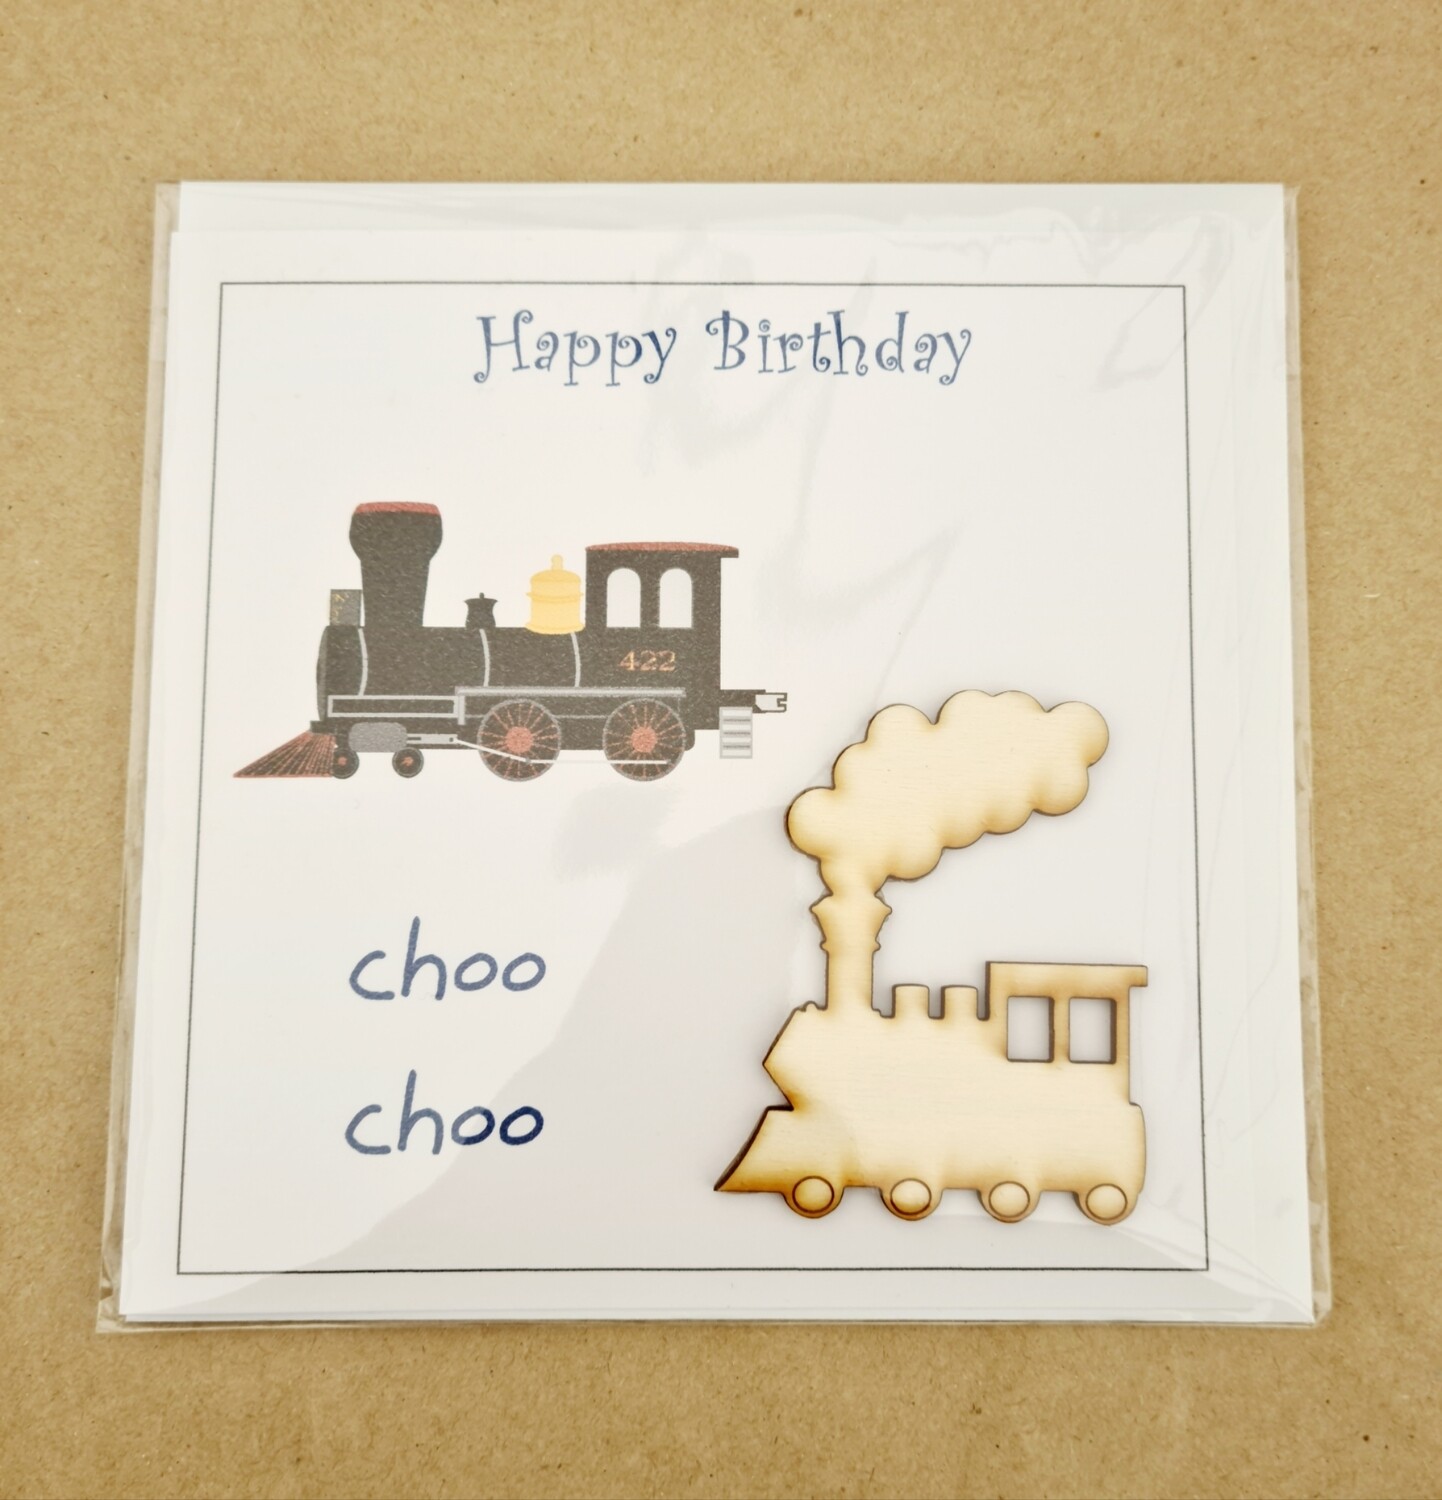 Choo choo Happy Birthday